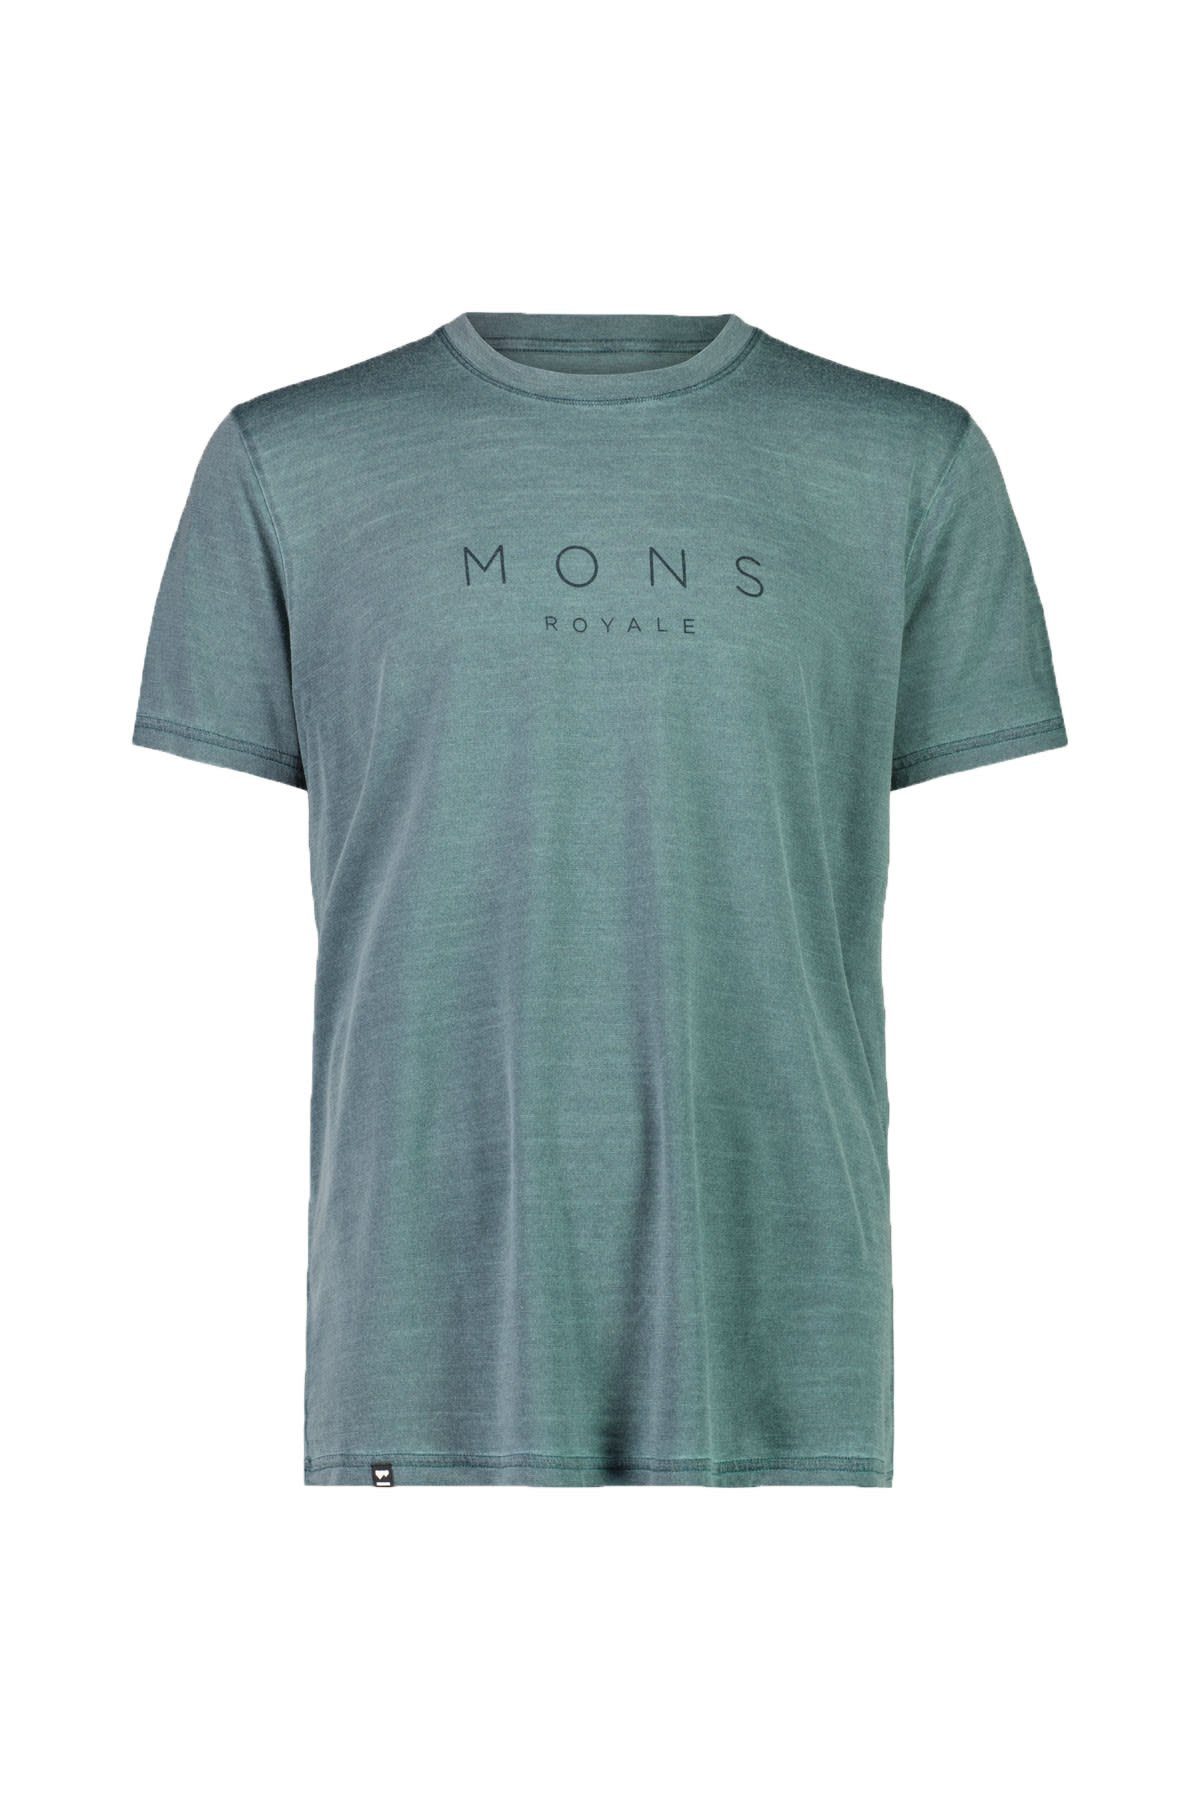 Mons Royale T-Shirt Mons Royale M Zephyr T-shirt Herren Kurzarm-Shirt Burnt Sage - Mons Fine Logo